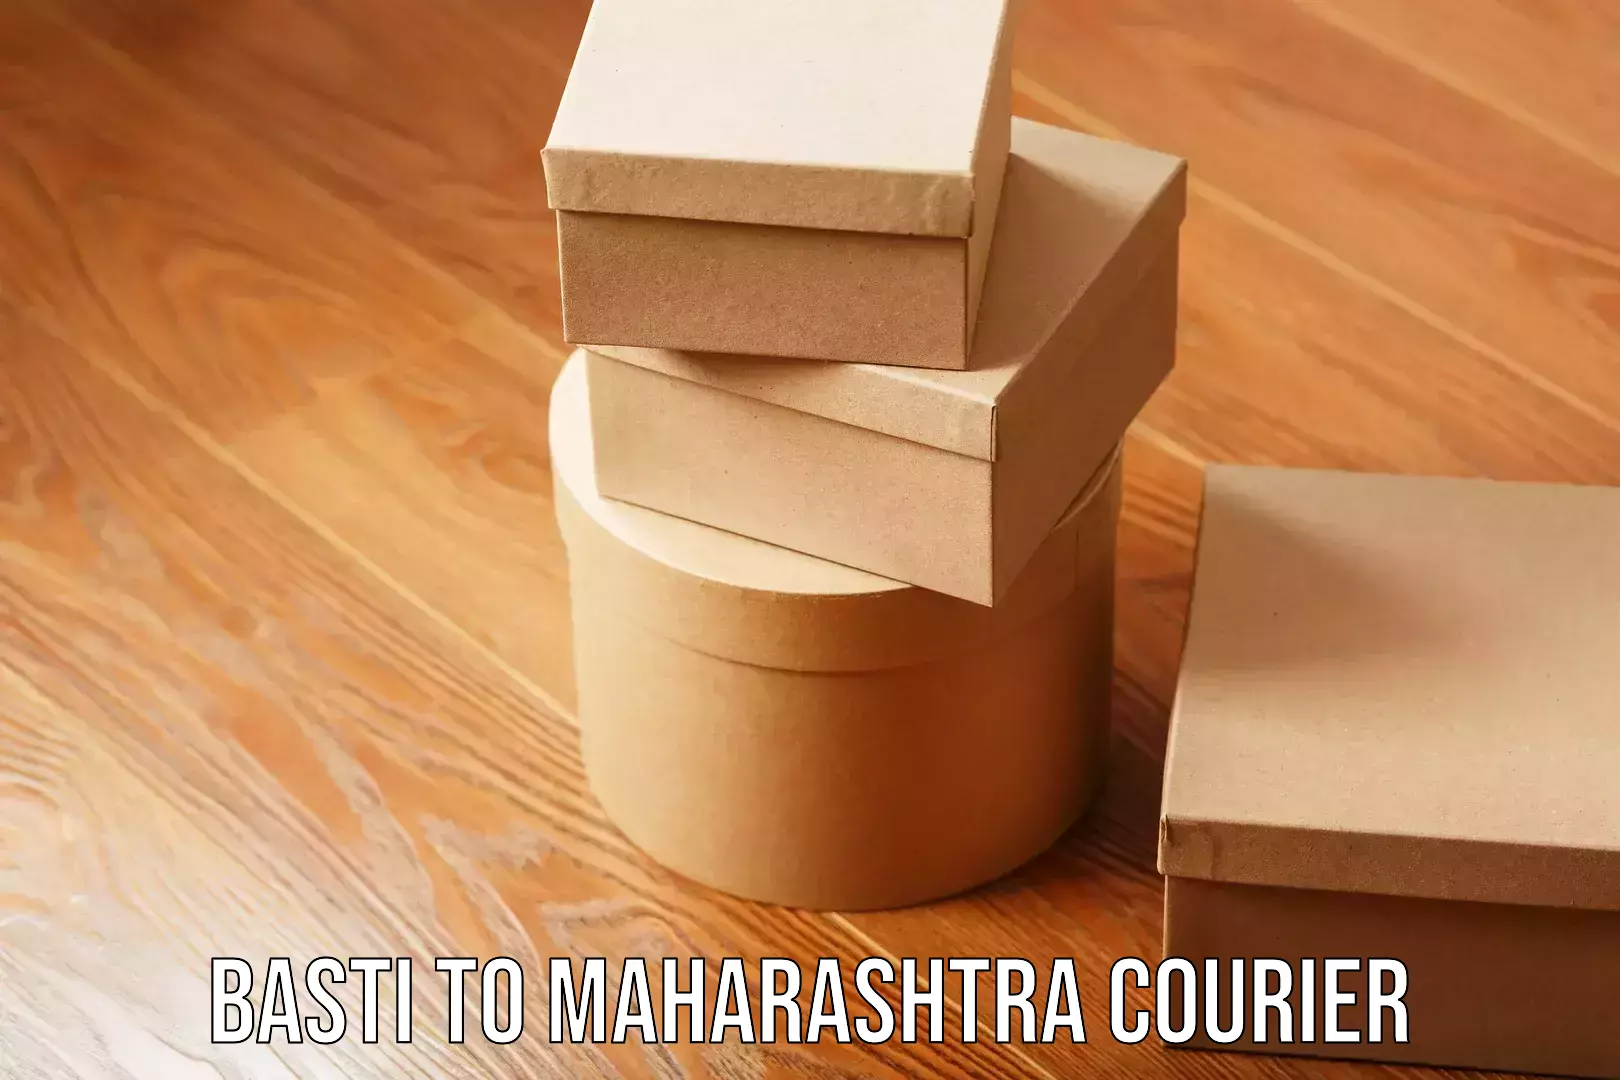 User-friendly delivery service in Basti to Maharashtra